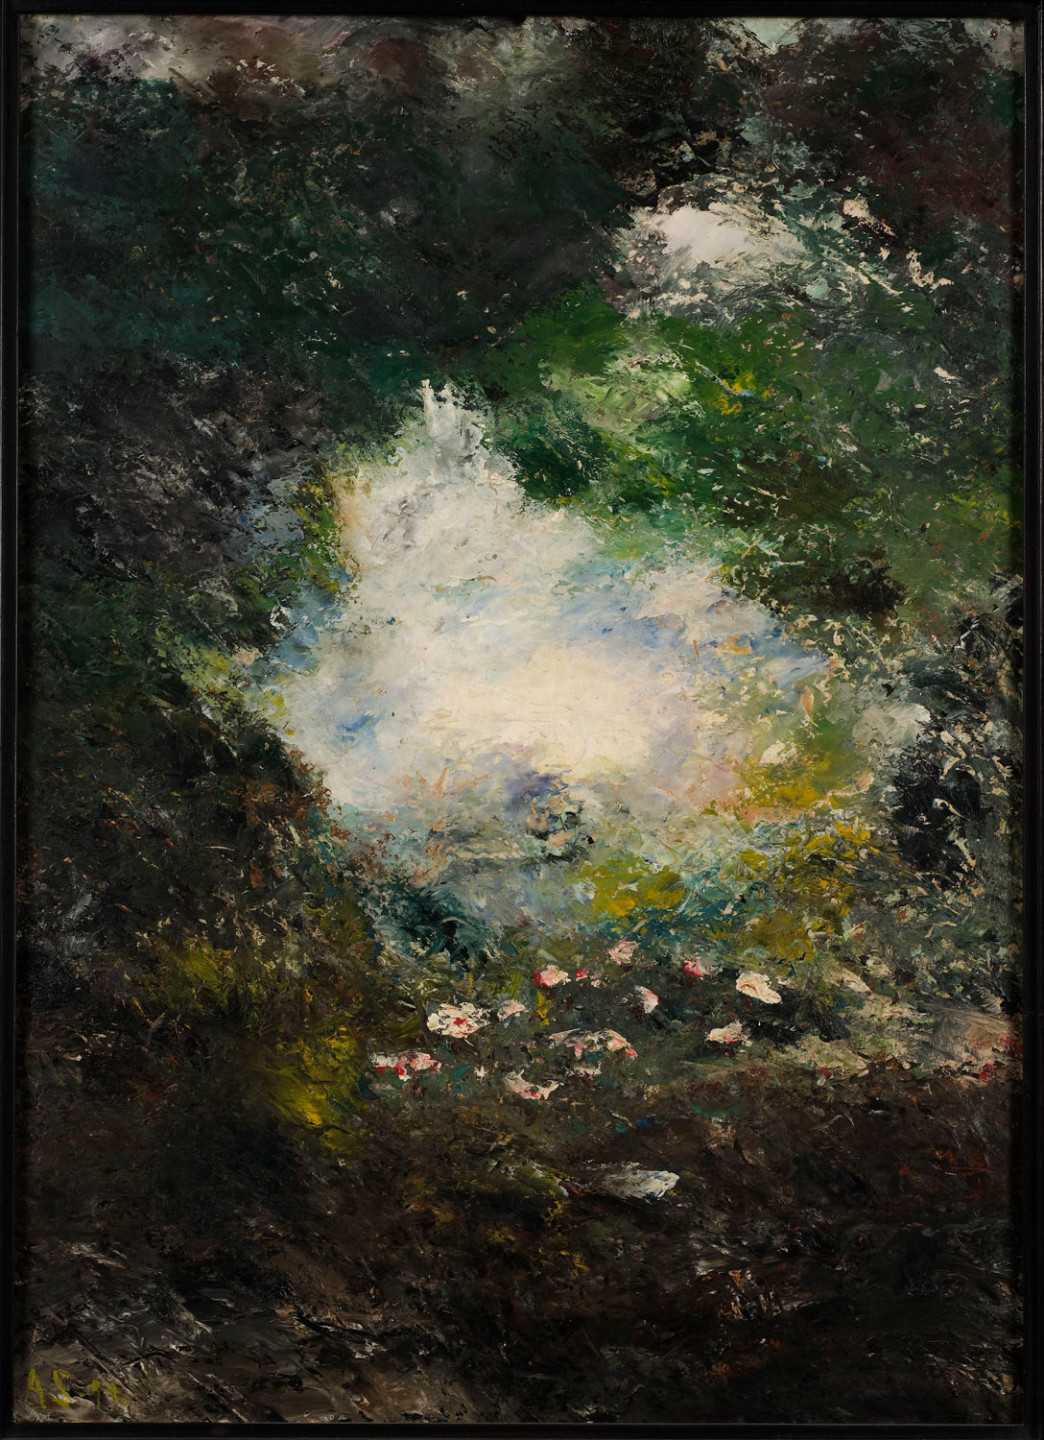 Painting by August Strindberg.